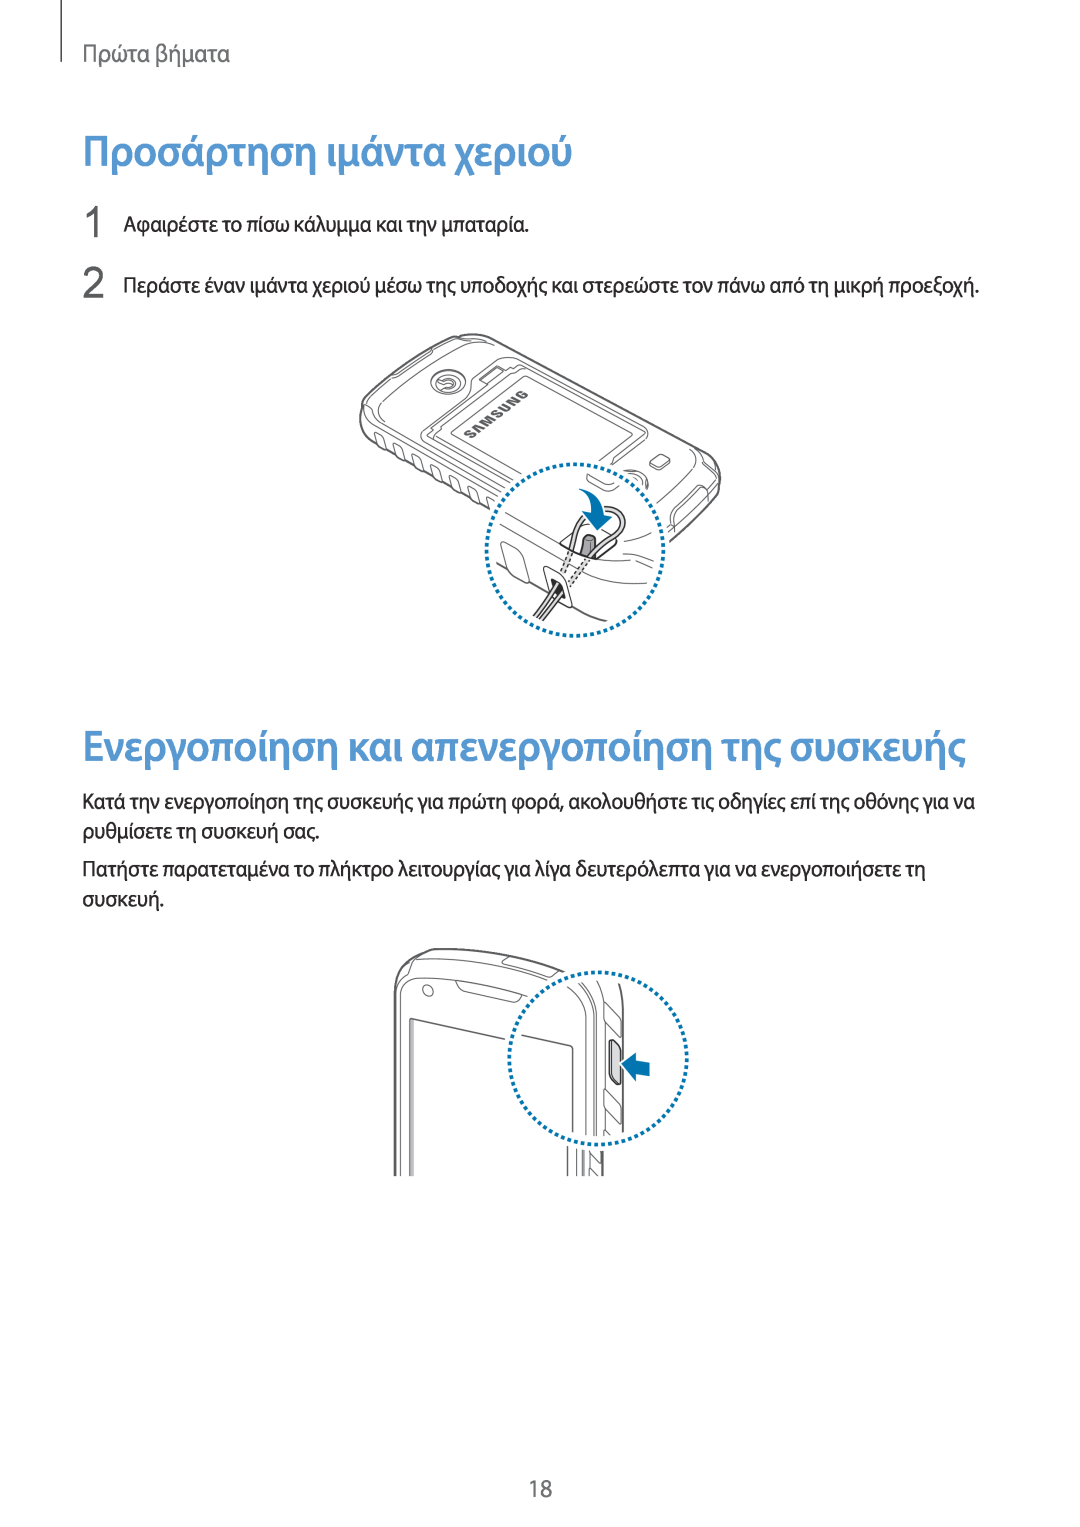 Samsung GT-S7710TAAVGR manual Προσάρτηση ιμάντα χεριού, Ενεργοποίηση και απενεργοποίηση της συσκευής, Πρώτα βήματα 